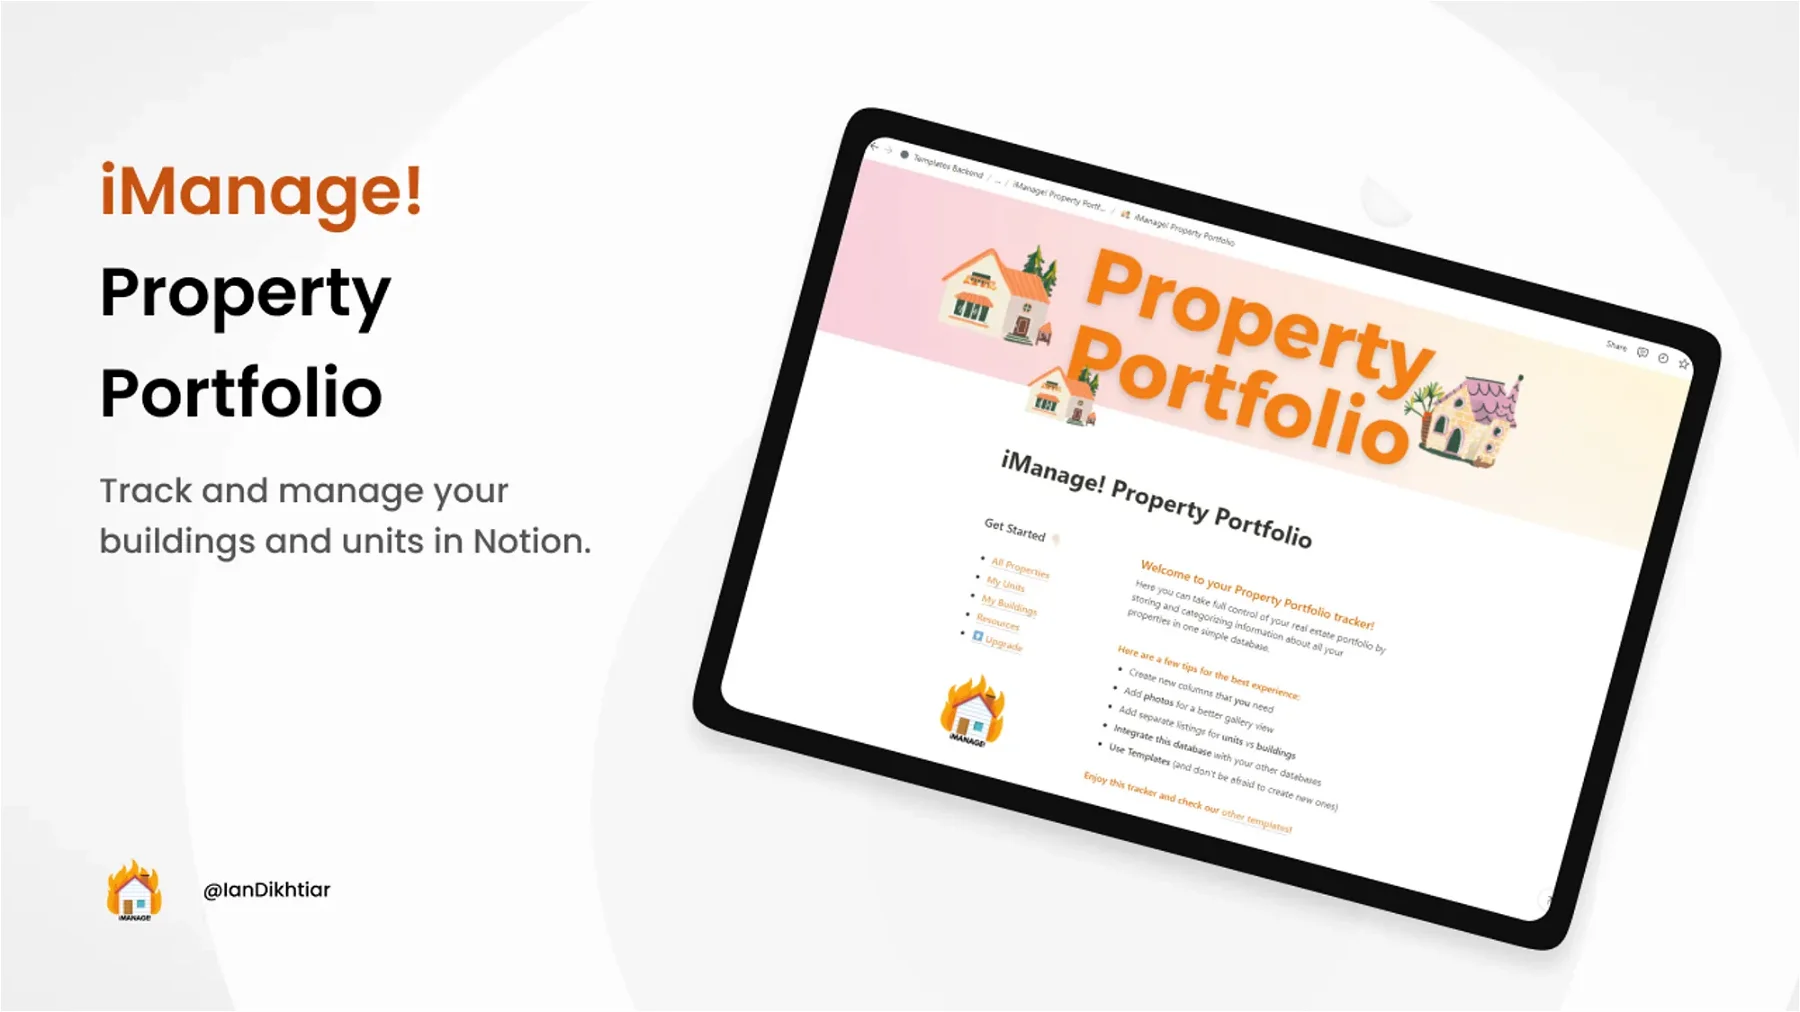 iManage! Property Portfolio